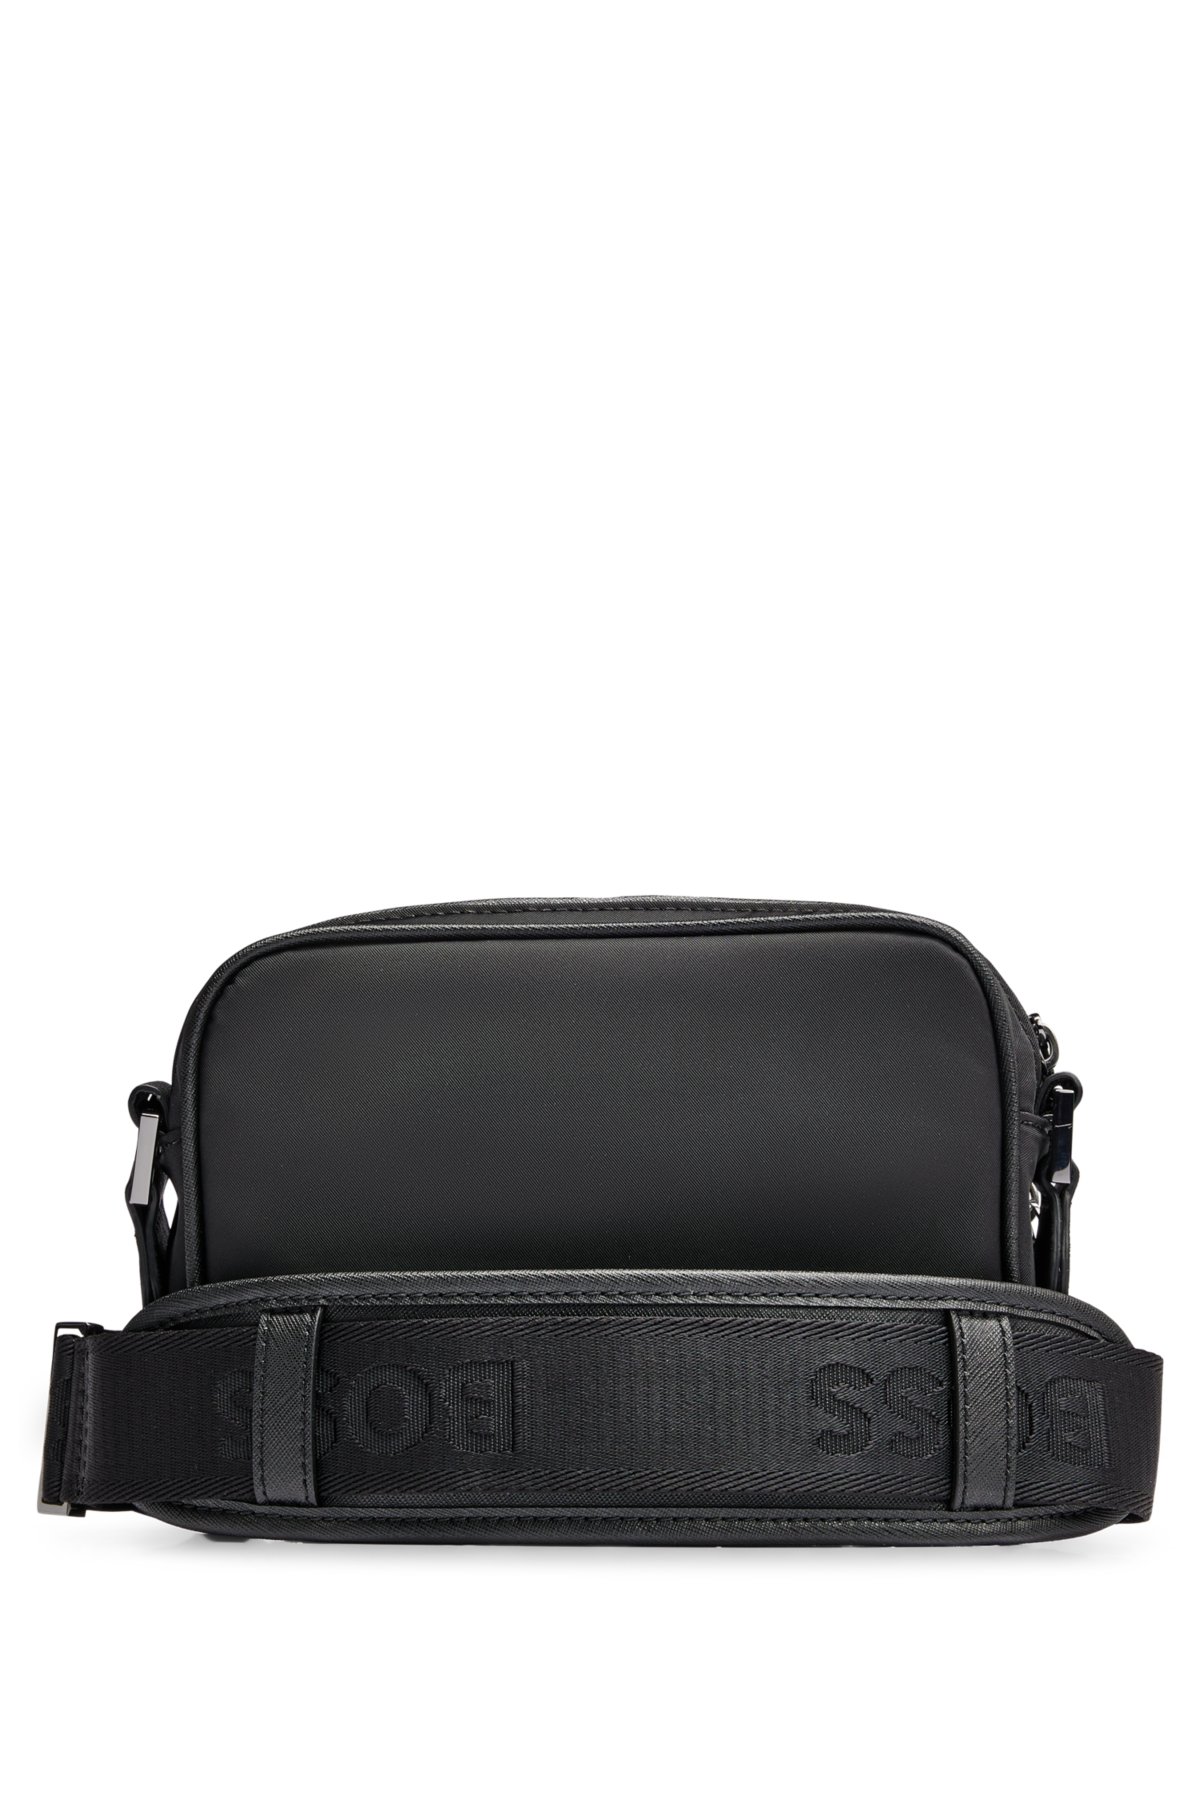 Crossbody bag with double-monogram hardware trim, Black